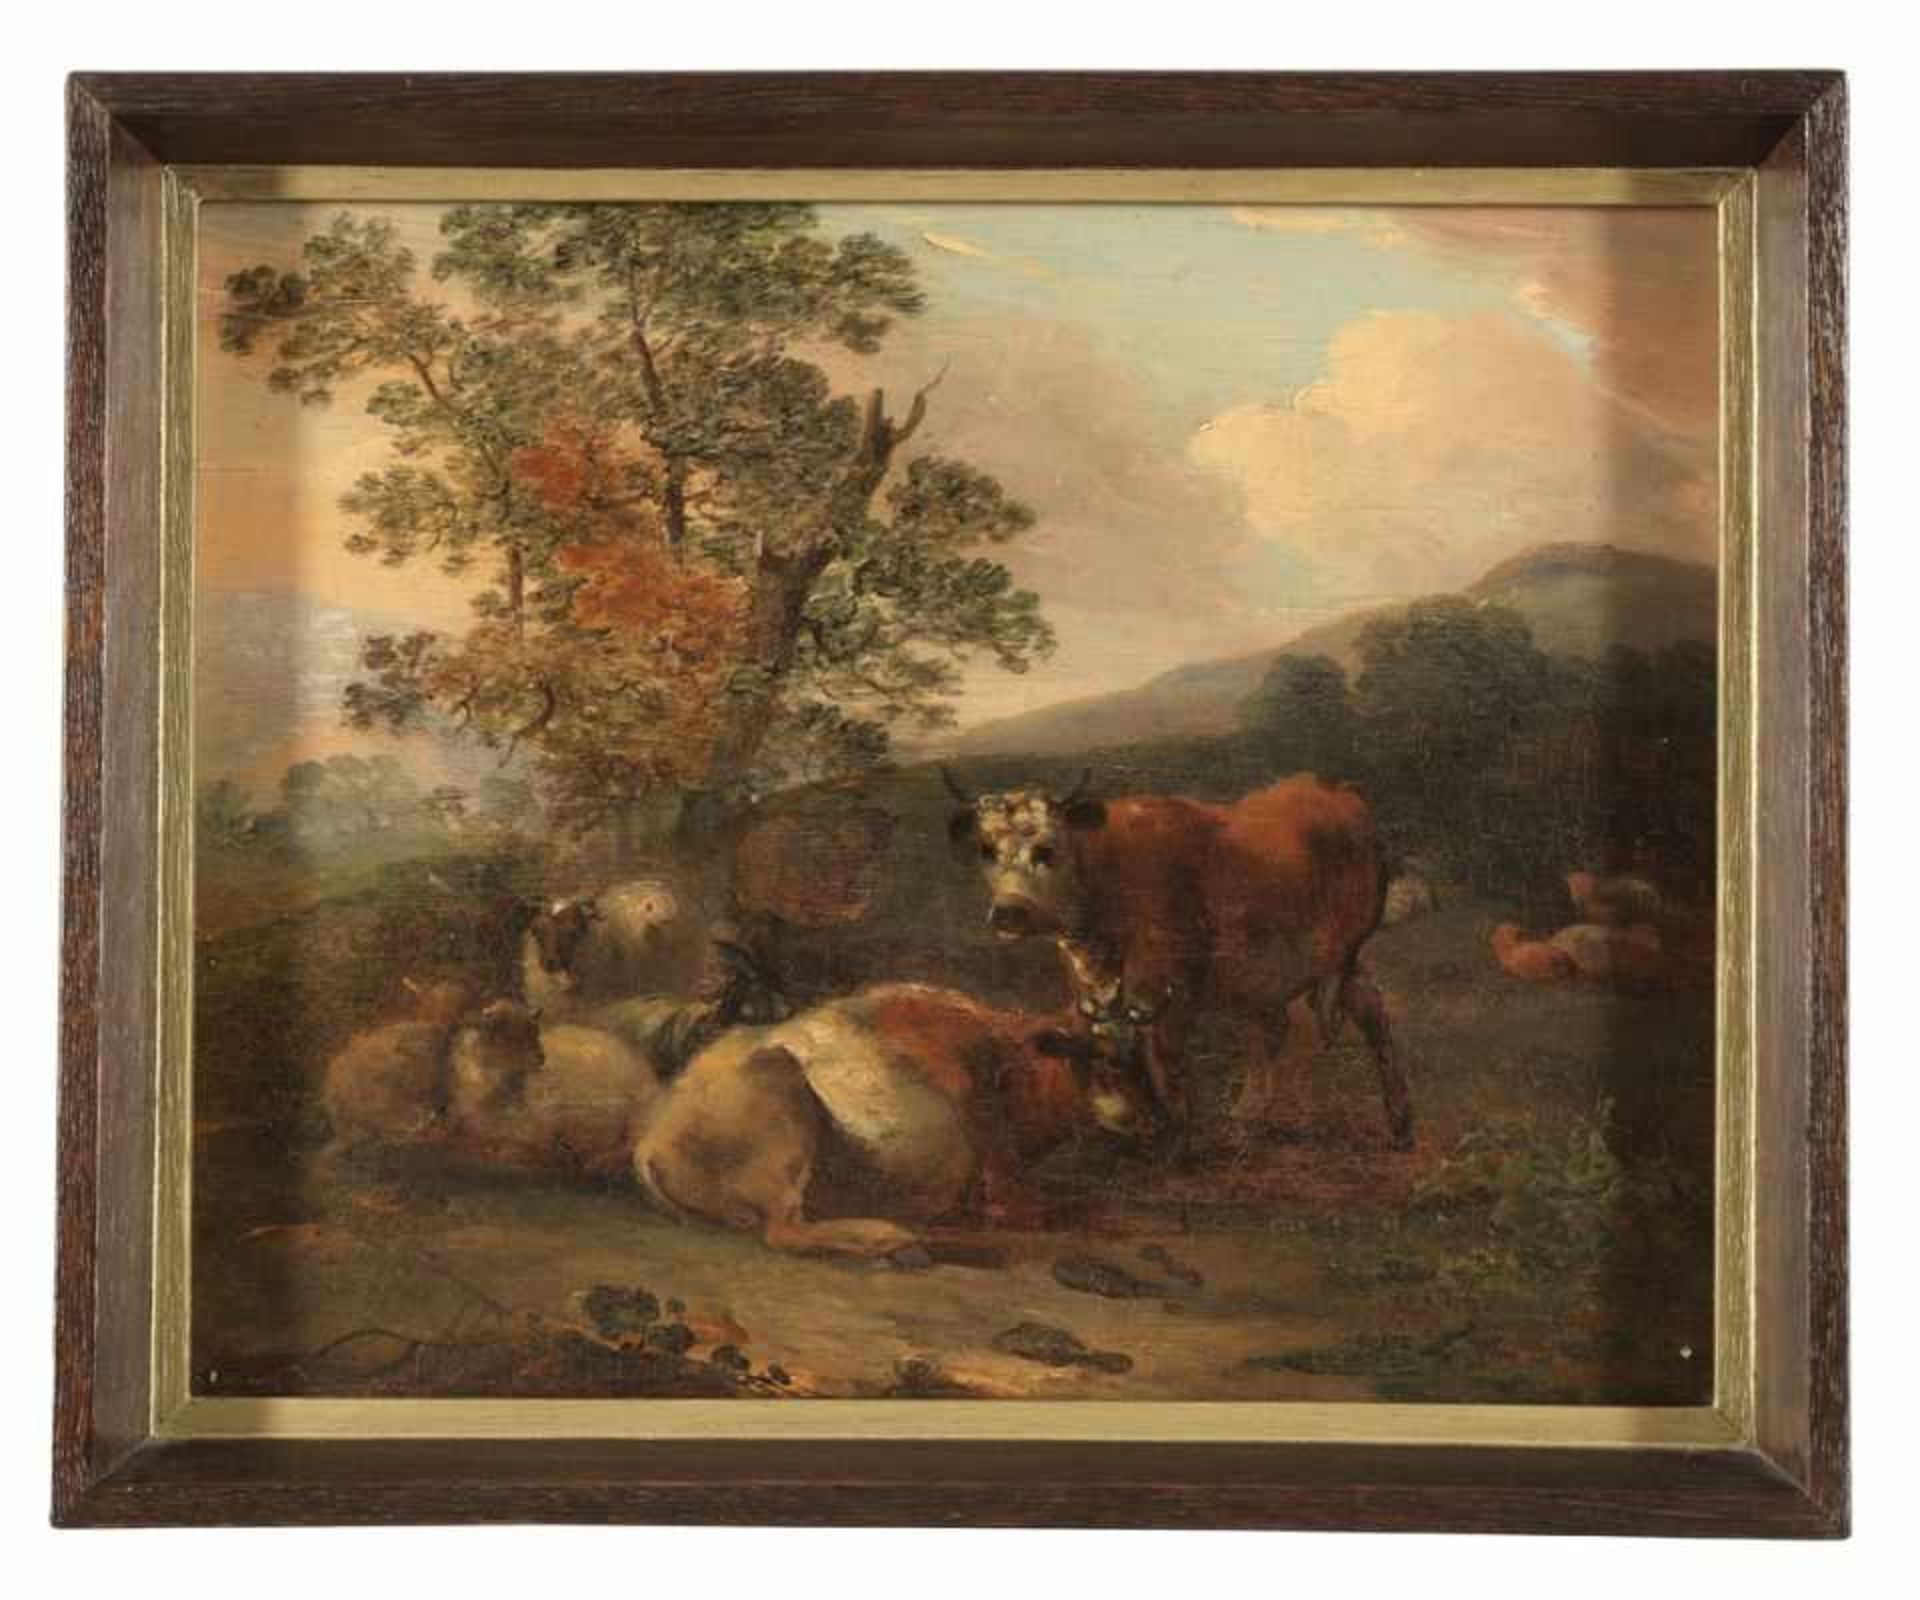 Künstler des 18. Jahrhunderts- Kühe auf dem Feld - Öl/Holz. 36 x 29 cm. Unsigniert. Rahmen. Rest. - Bild 2 aus 2